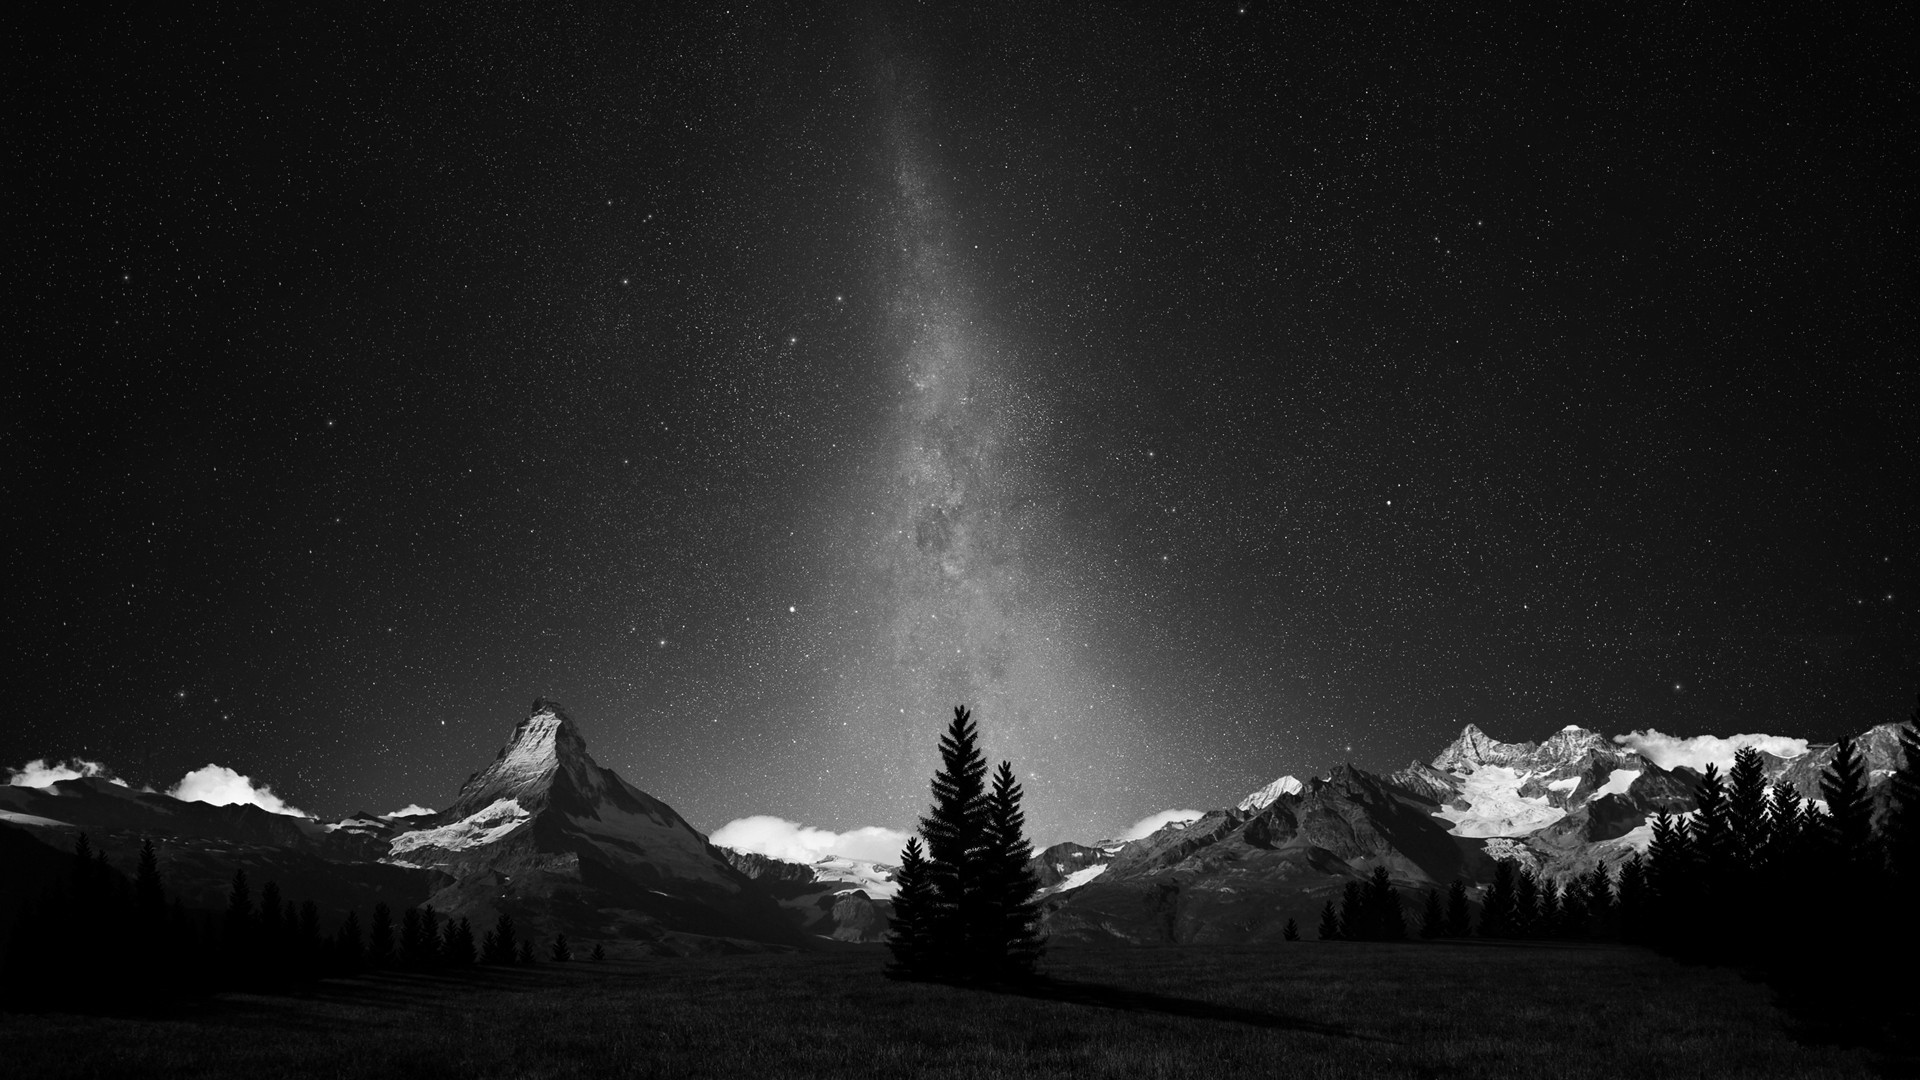 General 1920x1080 Milky Way galaxy night space art stars nature night sky monochrome mountains